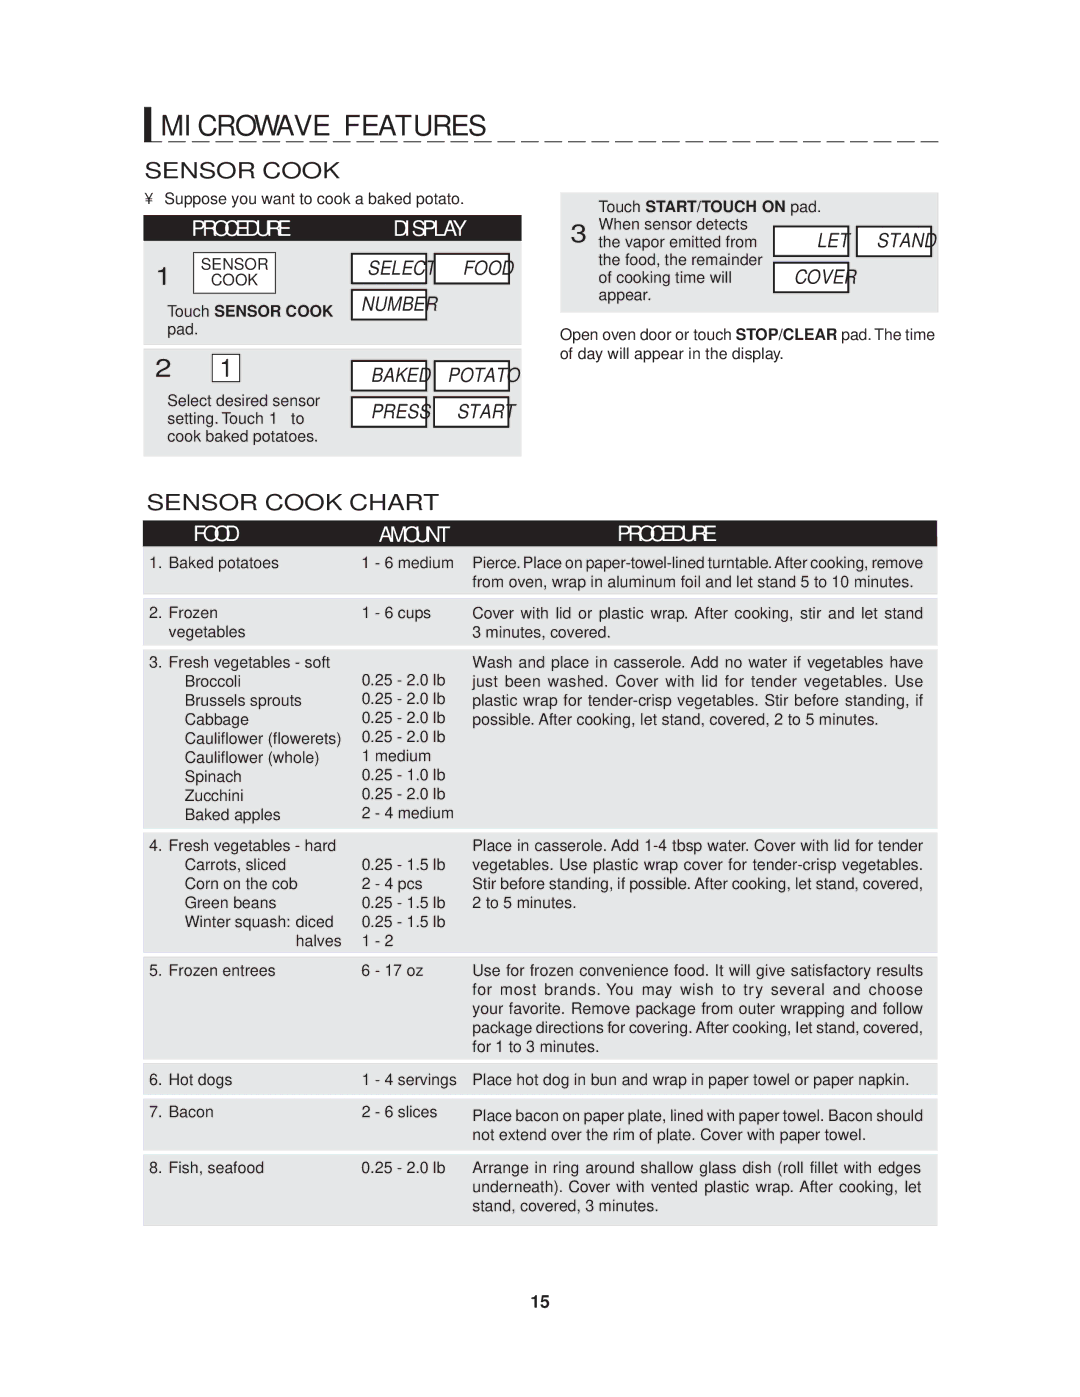 Sharp R-1871, R-1870, R1870BK, R-1872 operation manual Sensor Cook Chart, Press, Touch Sensor Cook 